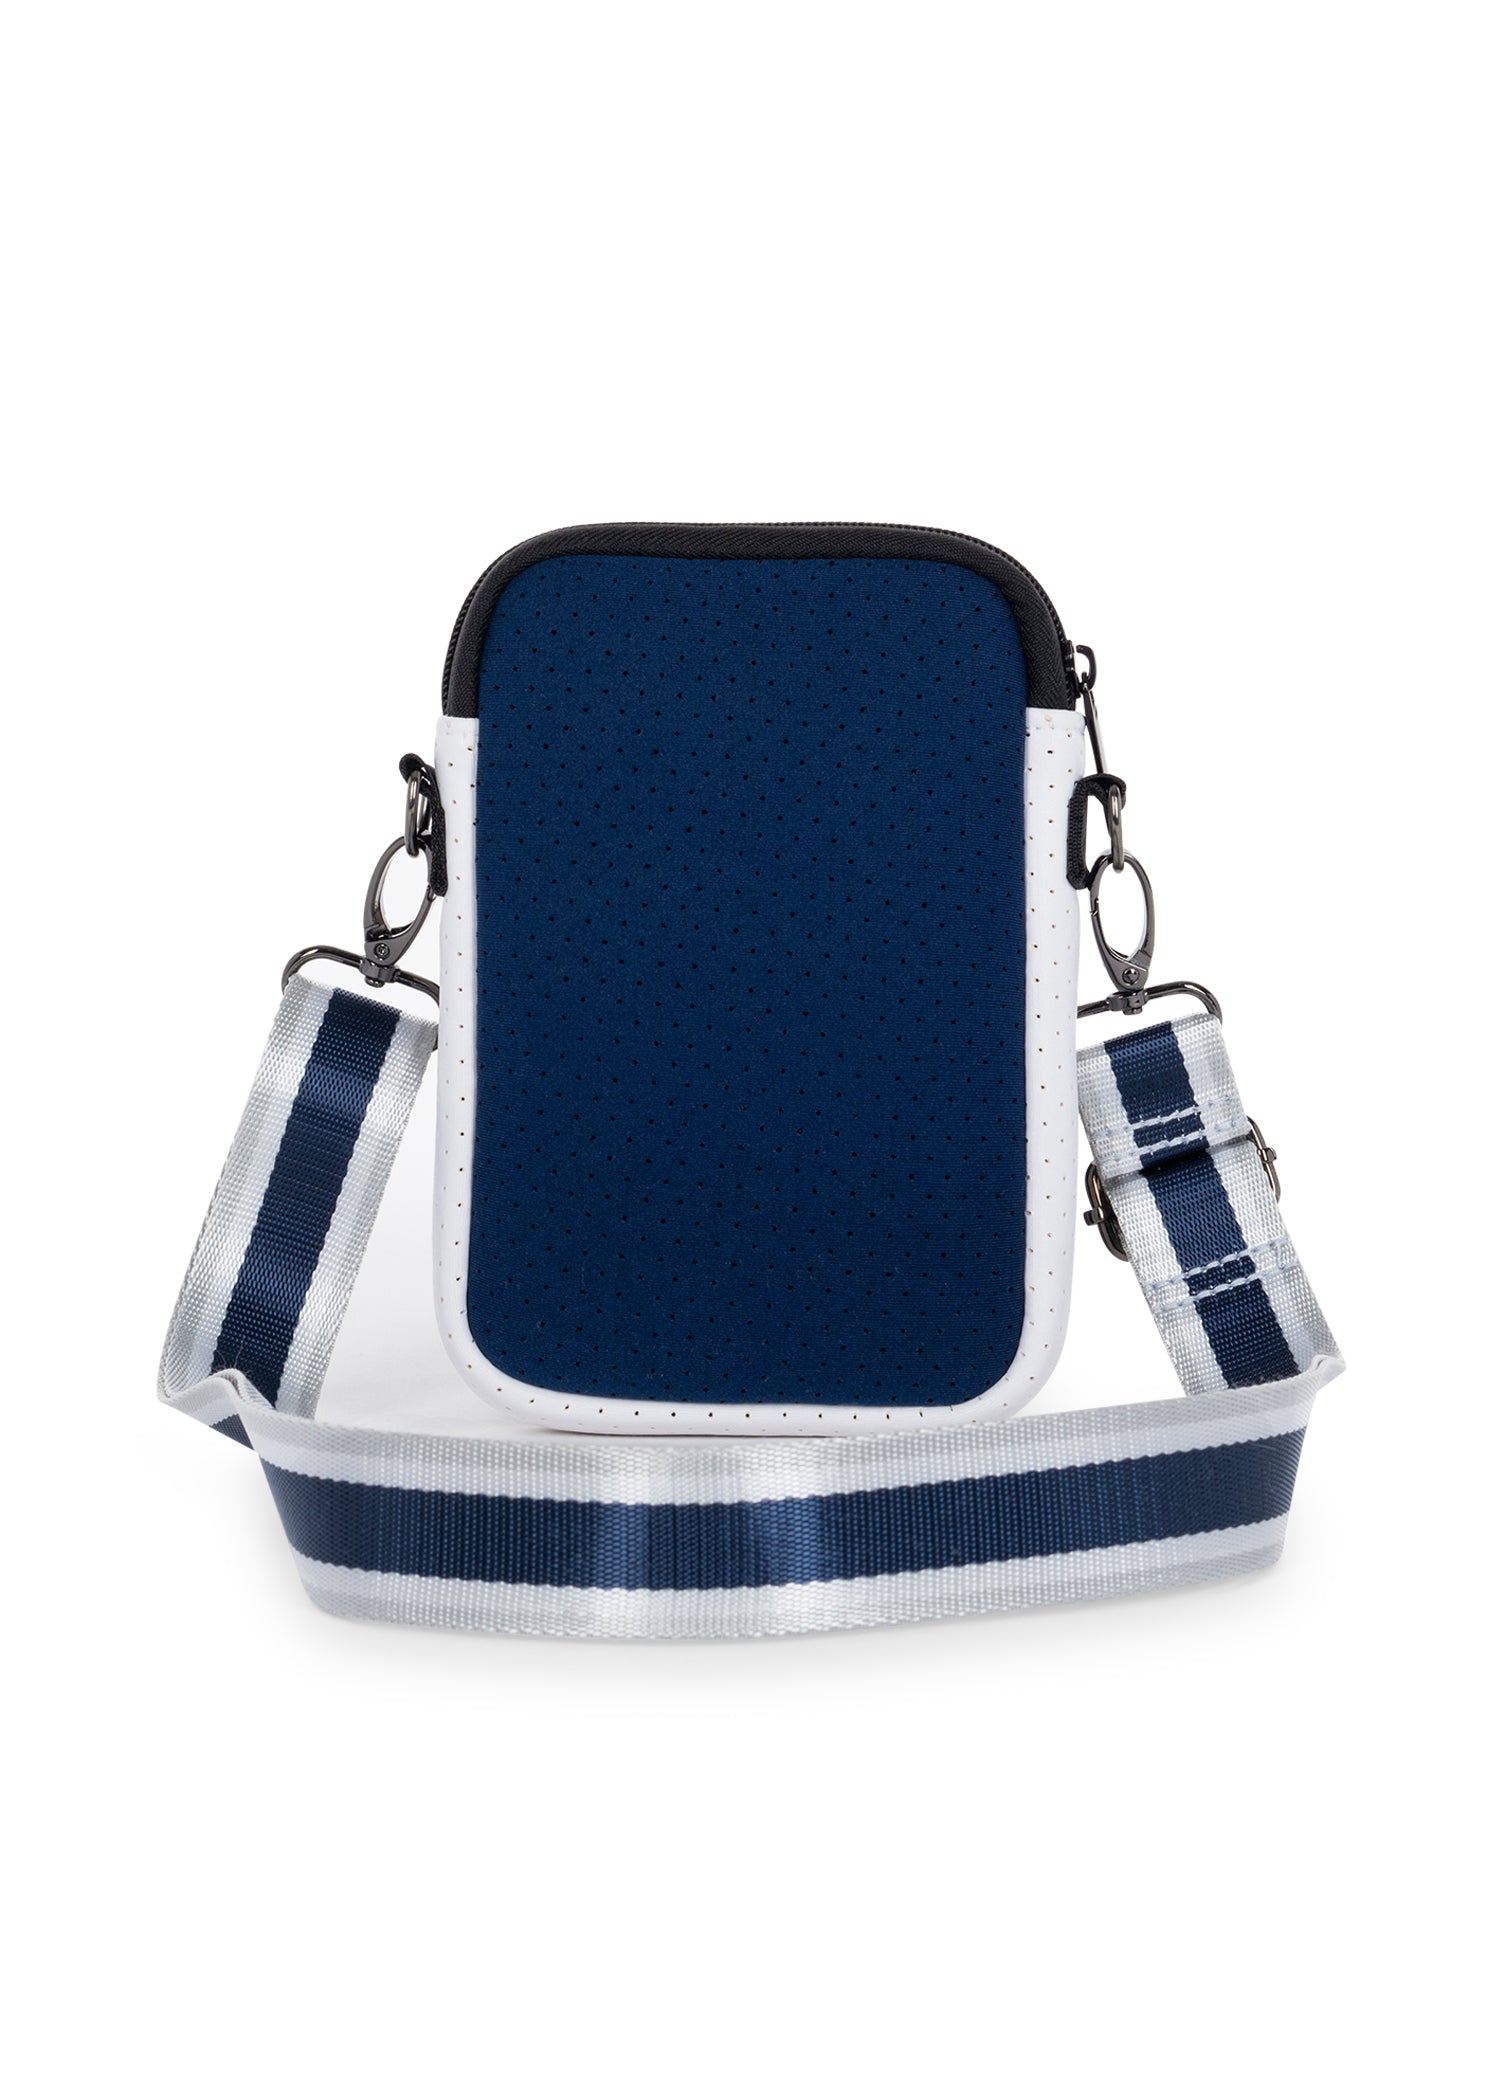 casey yacht cellphone bag